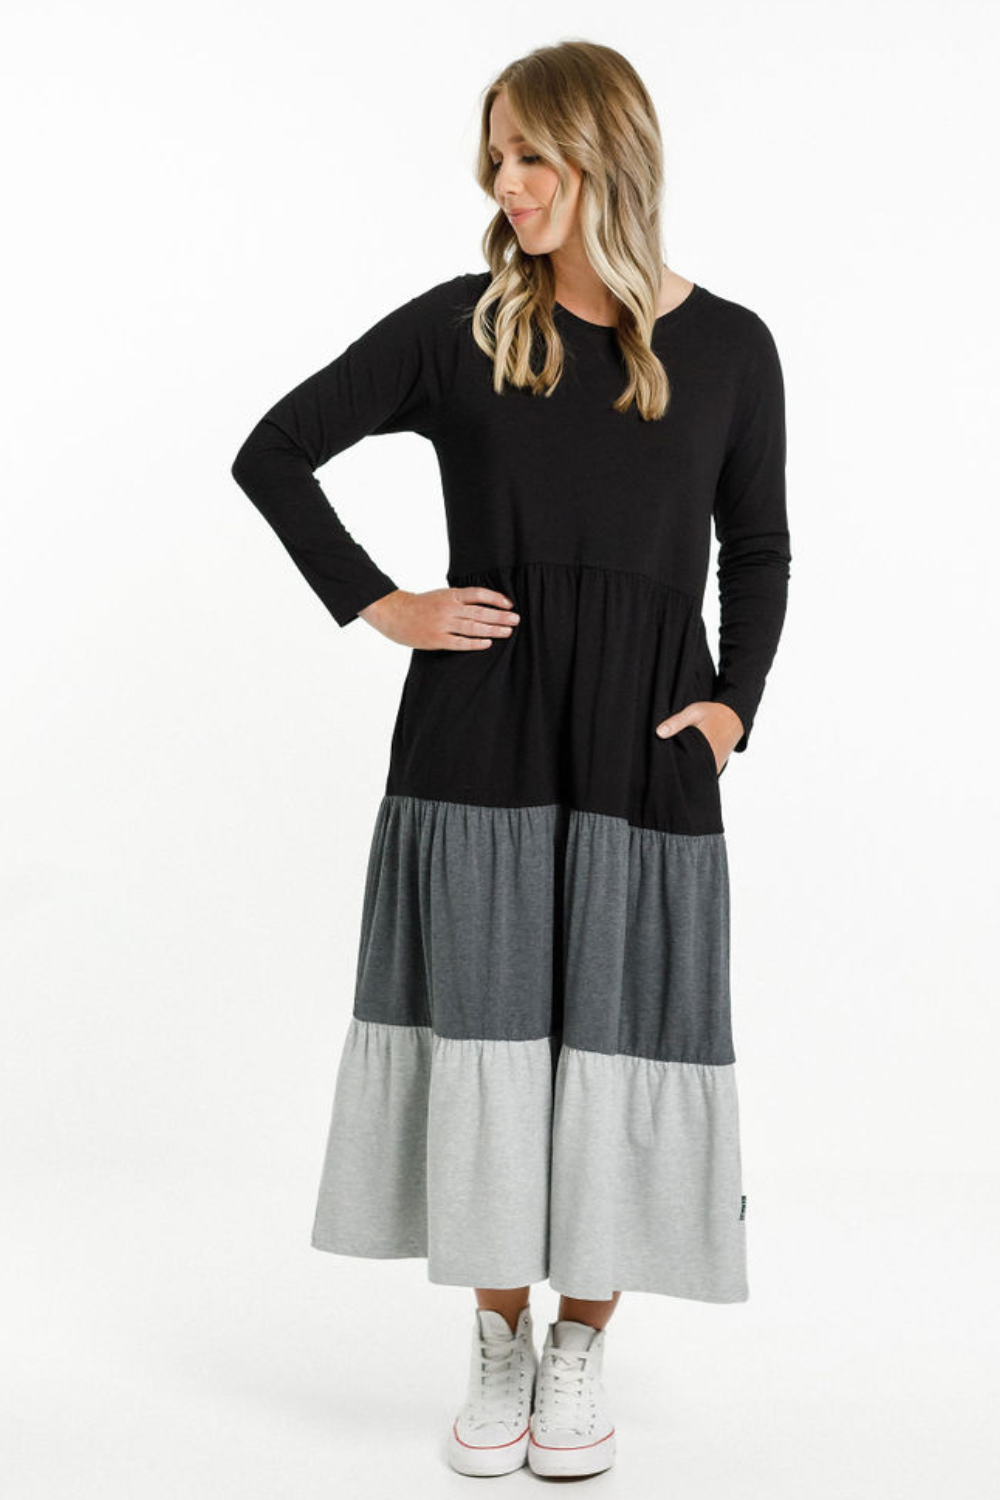 Home Lee Long Sleeve Kendall Dress- Black/Choarcoal/Grey